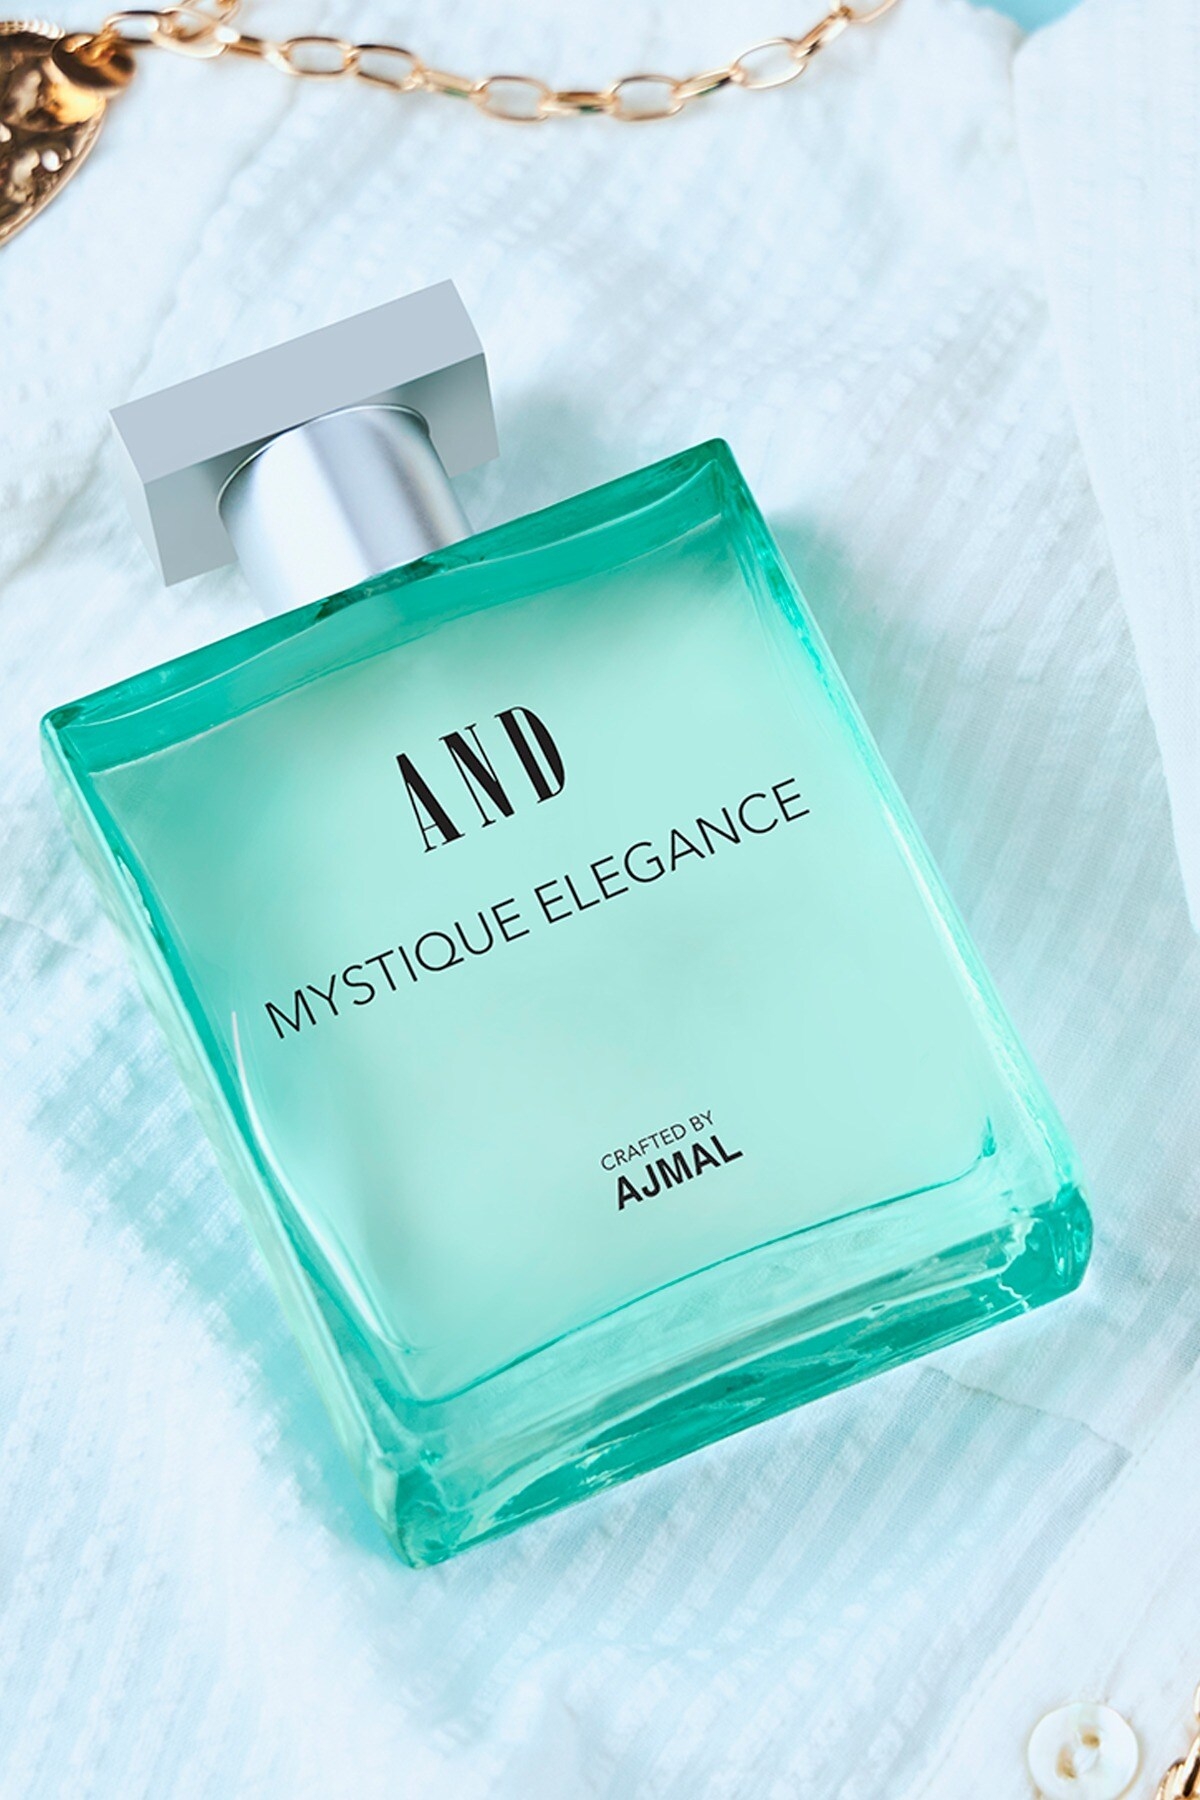 AND | Mystique Elegance Floral Vanilla Eau De Parfum 1